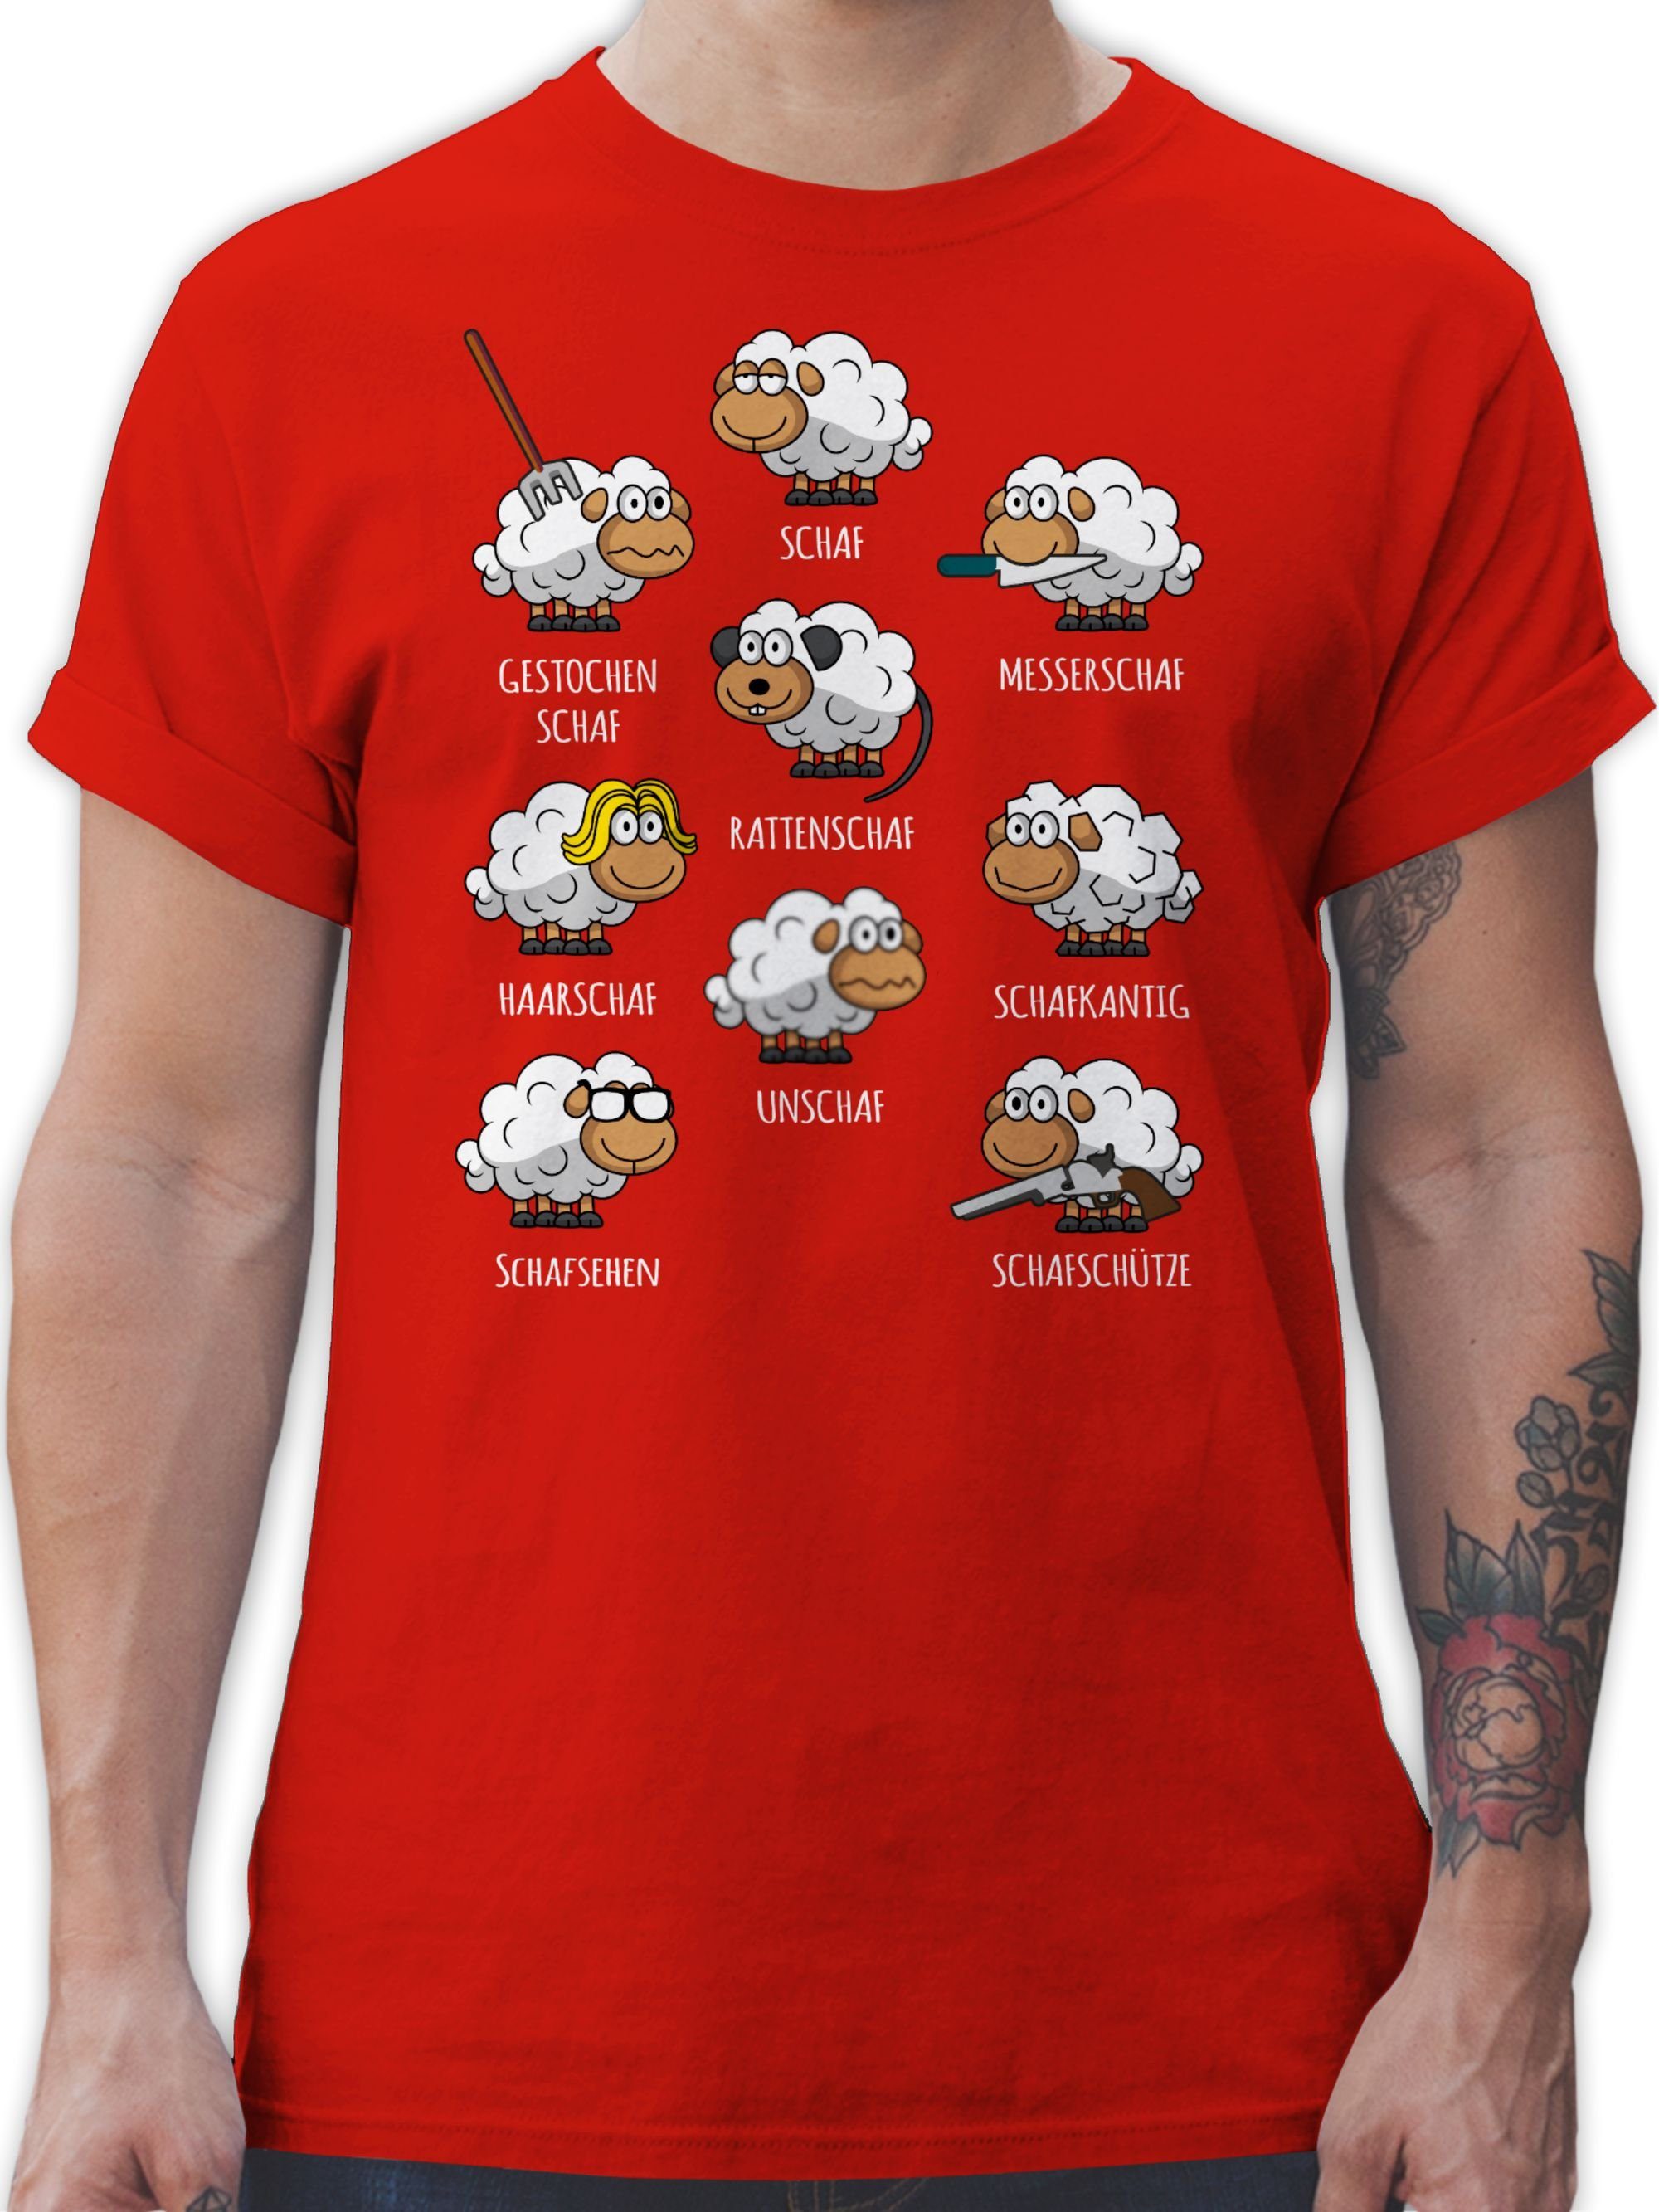 Shirtracer T-Shirt Schafe Schäfchen Schäfer Schaf Sheep Schafbauer Lustig Witzig Schaf 02 Rot